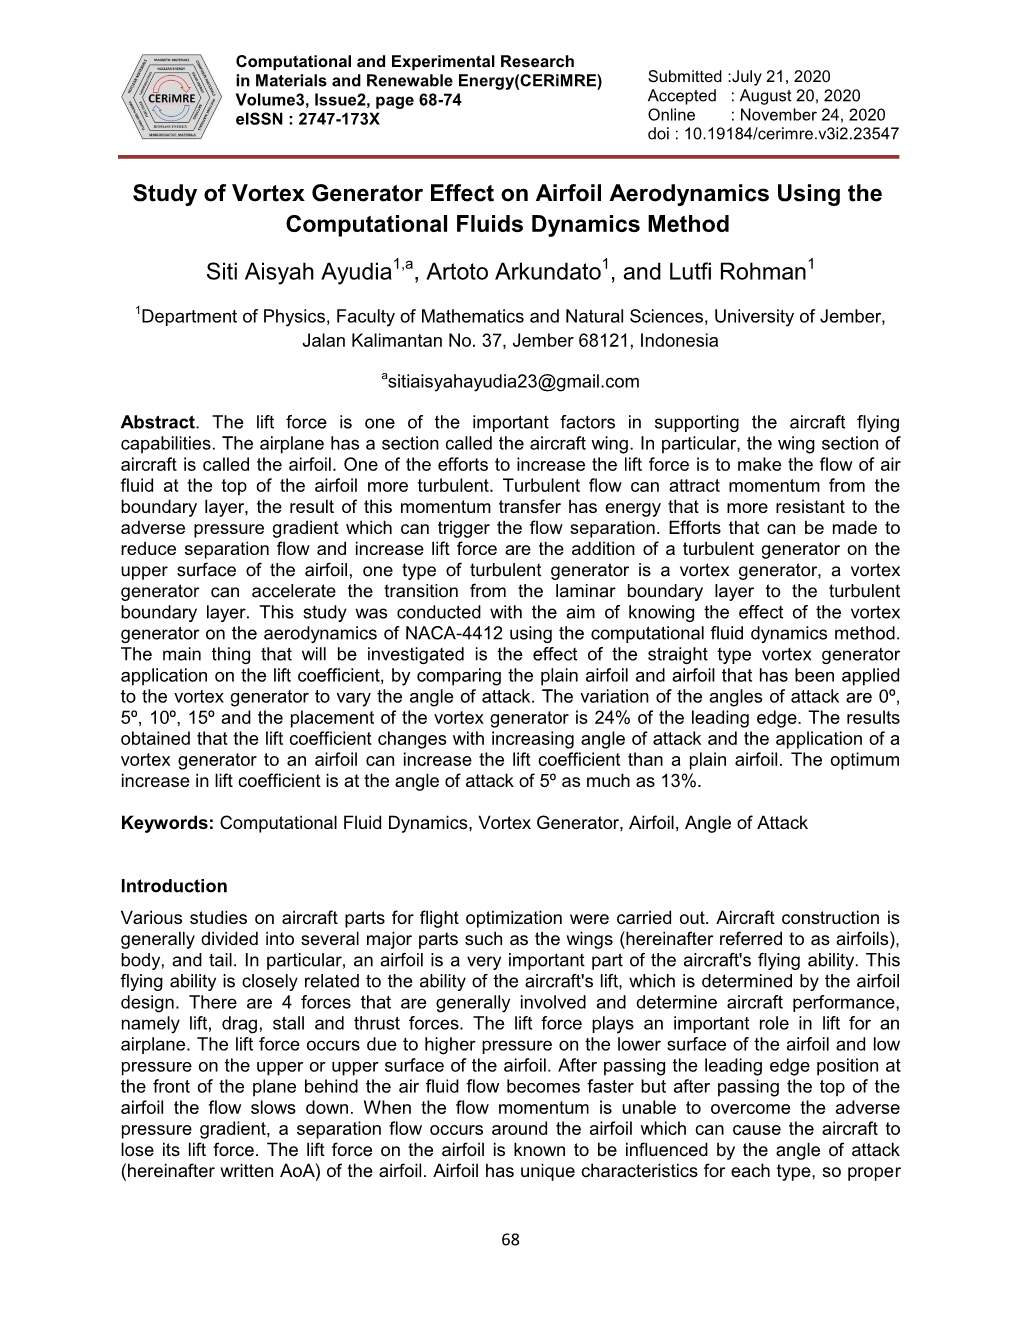 Study of Vortex Generator Effect on Airfoil Aerodynamics Using the Computational Fluids Dynamics Method